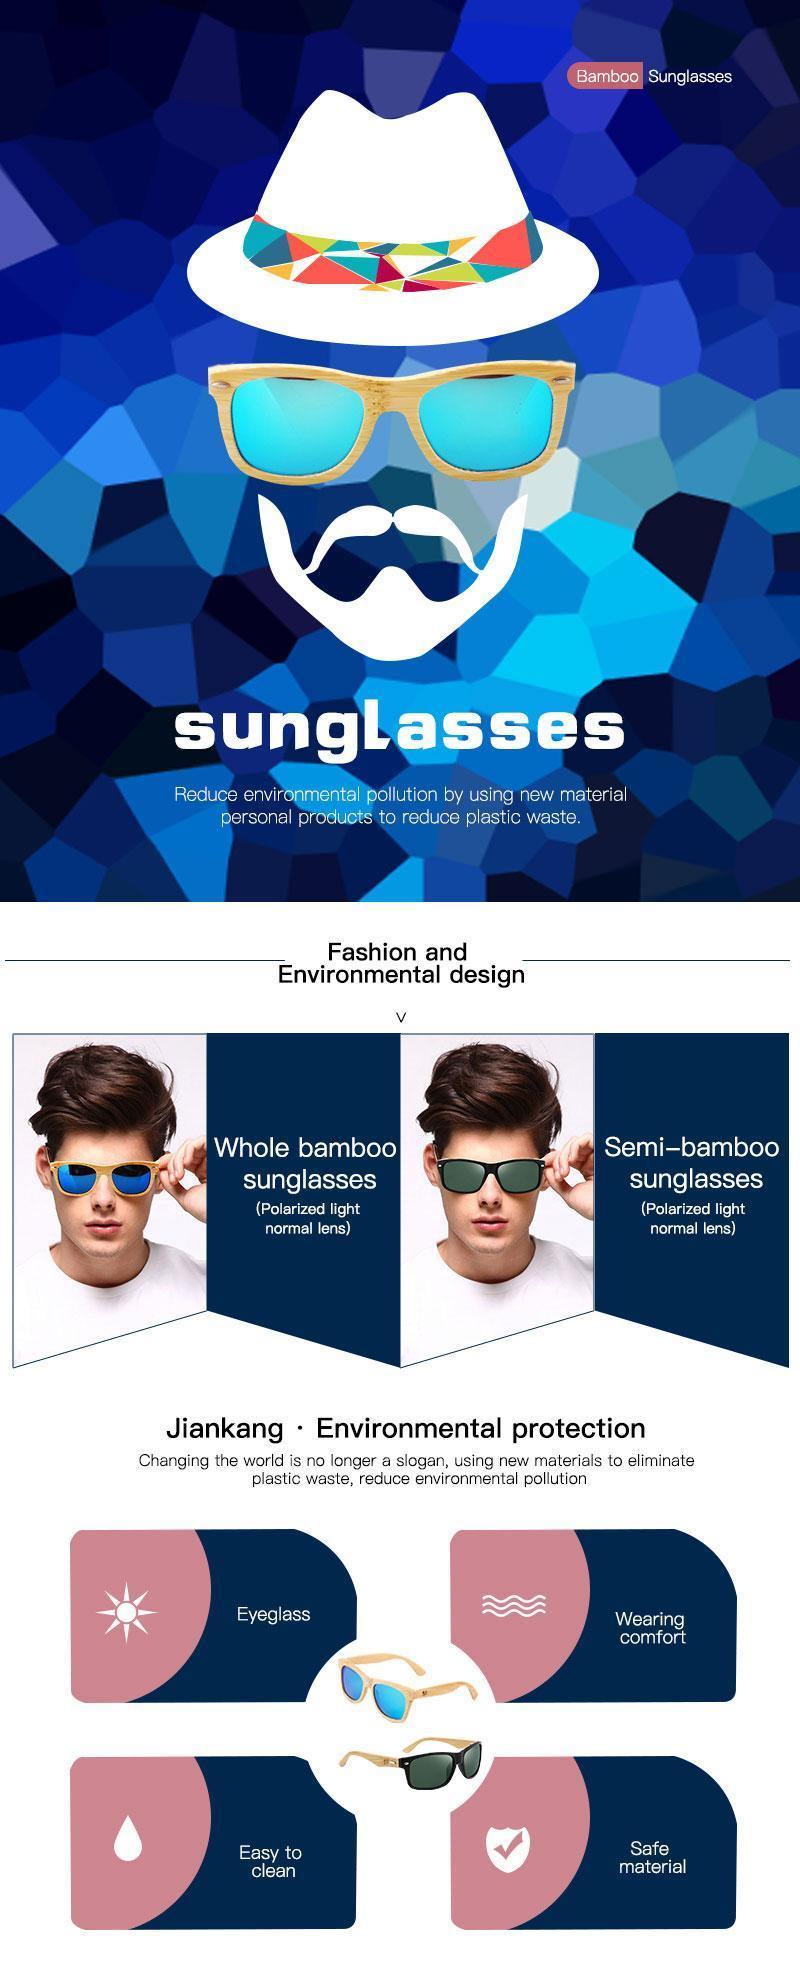 100% UV Protection Man Woman Wooden & Bamboo Sunglasses